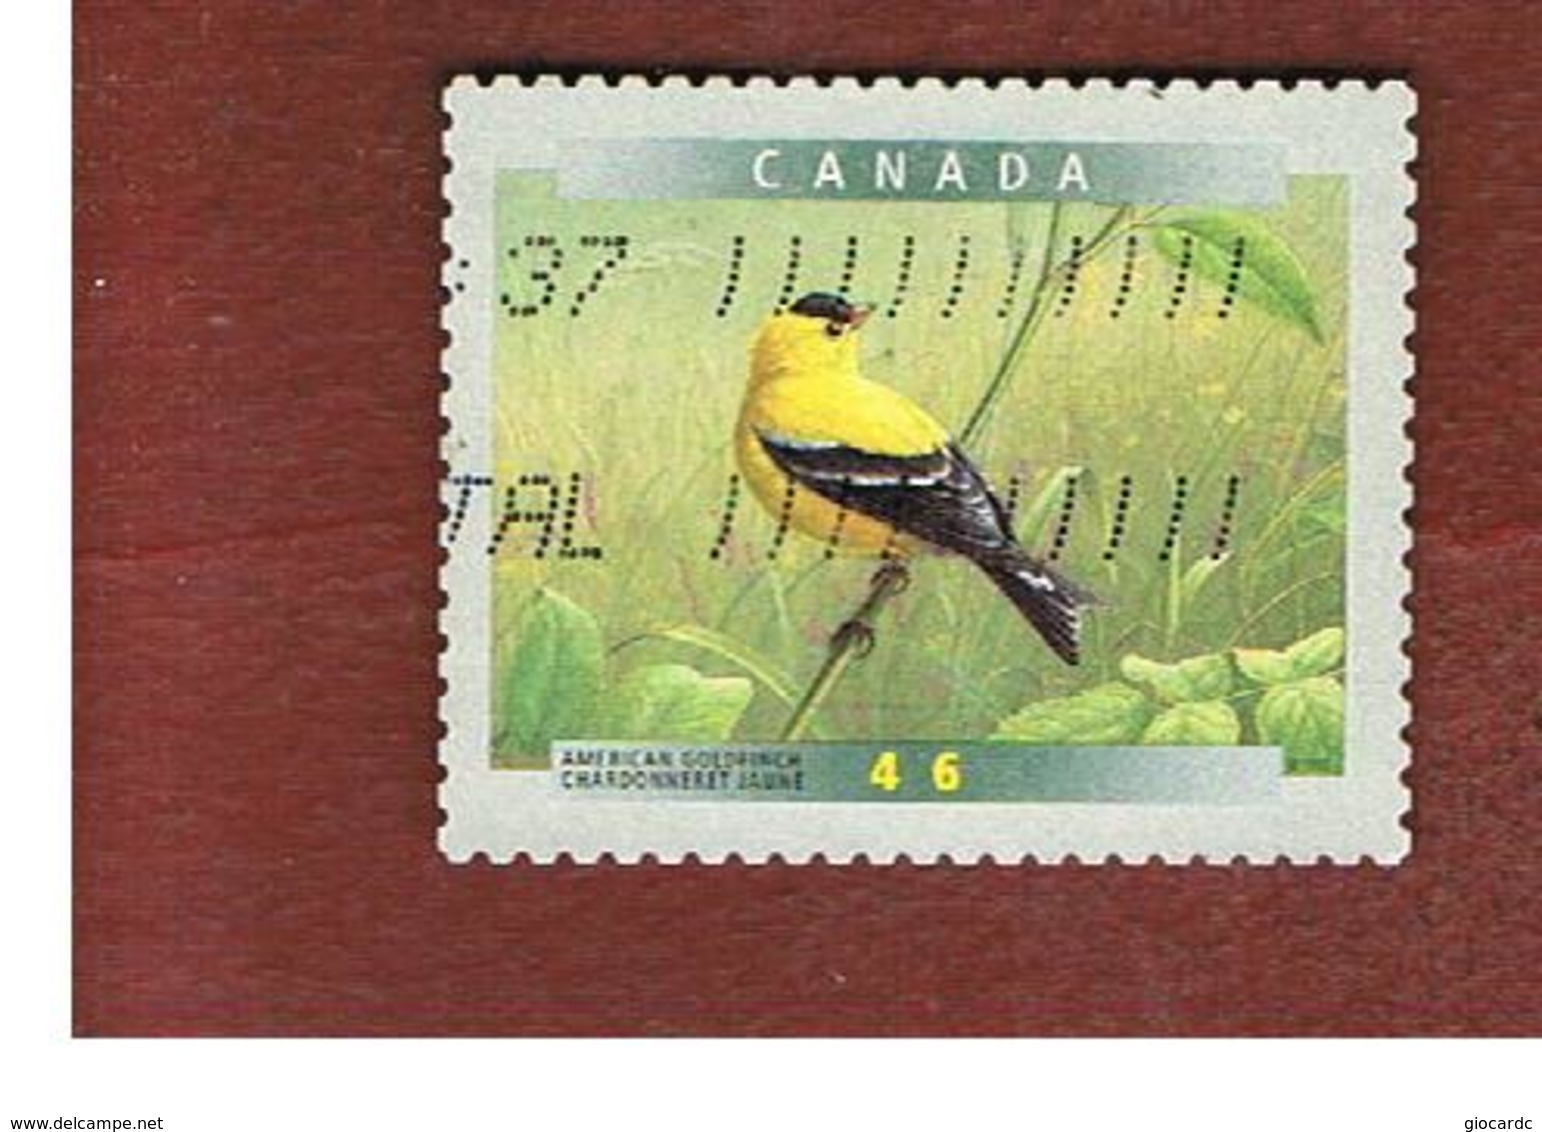 CANADA   -  SG 1867  -  1999   CANADIAN BIRDS: AMERICAN GOLDFINCH                -      USED - Usati